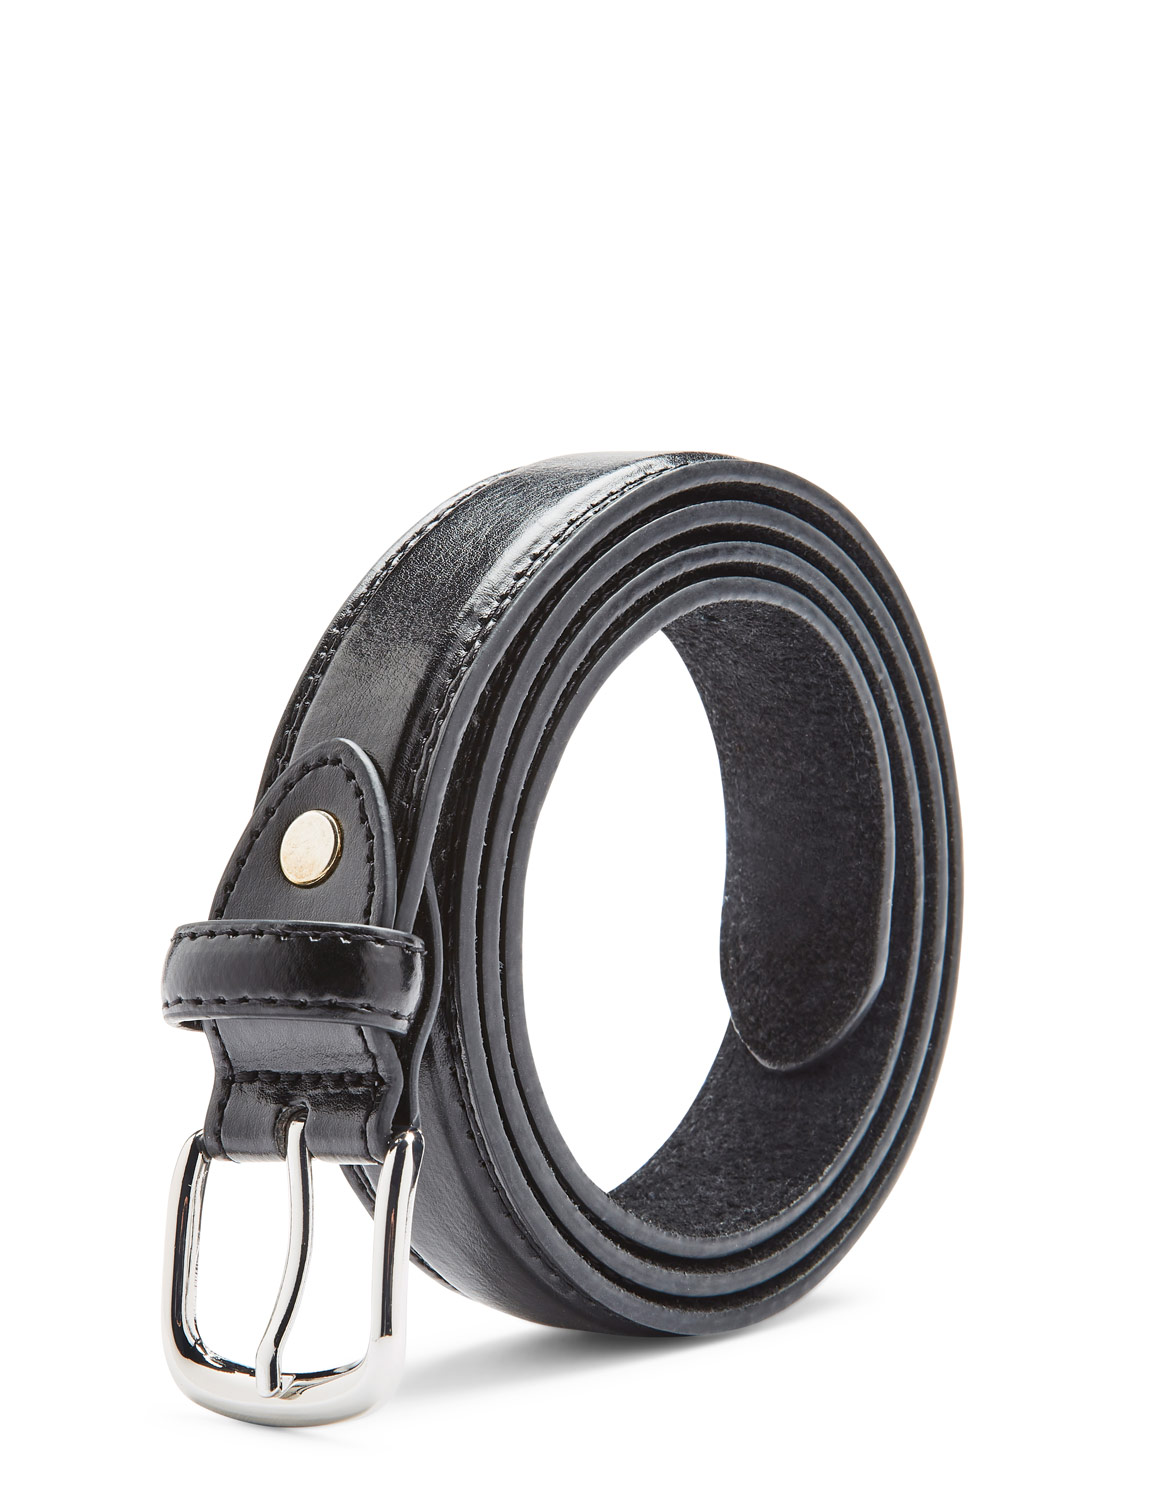 Chums Mens Leather Belt Casual 1 Inch Fashion Trouser Belt Ebay